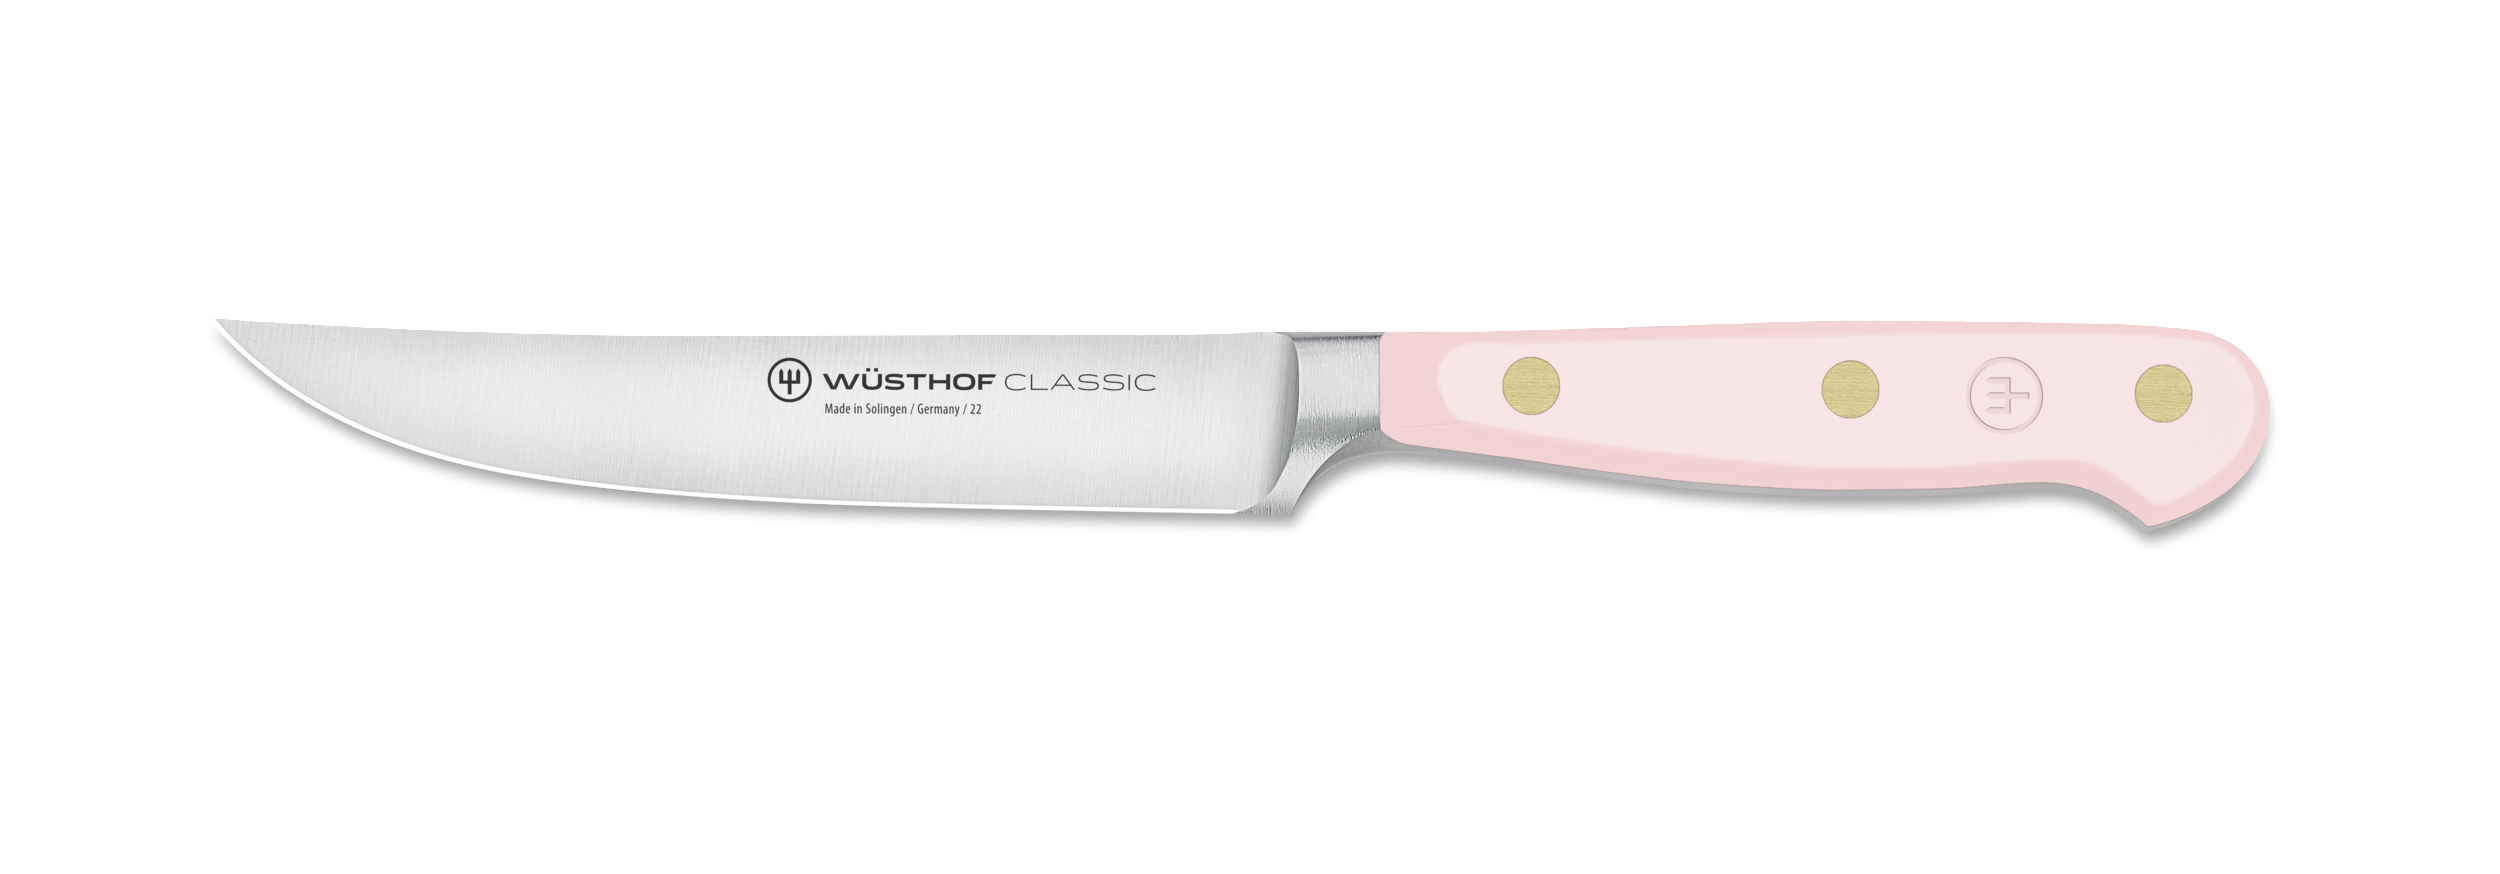 Wusthof Classic Coral Peach - 4 Pc. Steak Knife Set – Chef's Arsenal